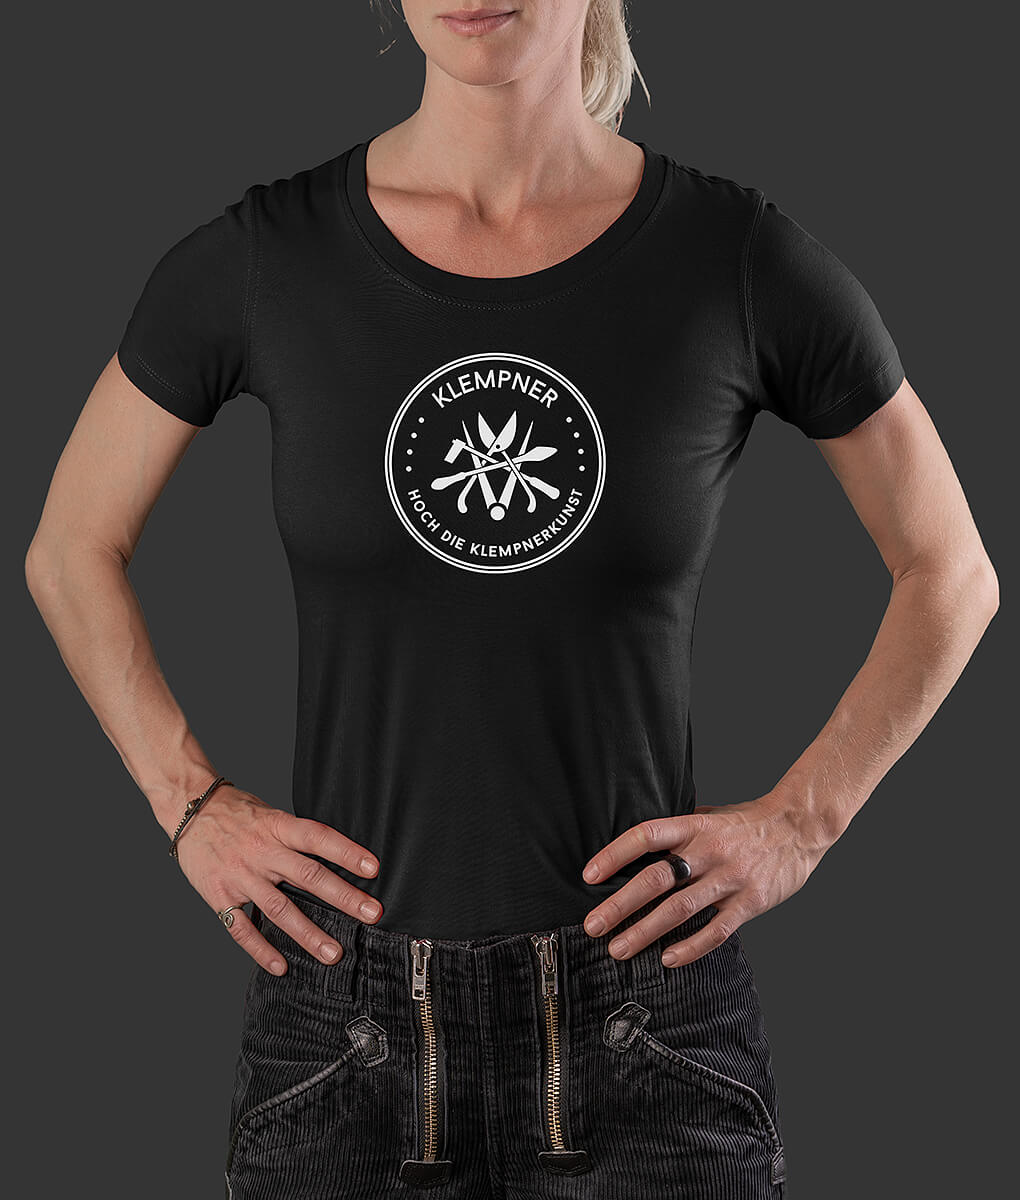 T-Shirt Louisa Siegel Klempner Brust schwarz S